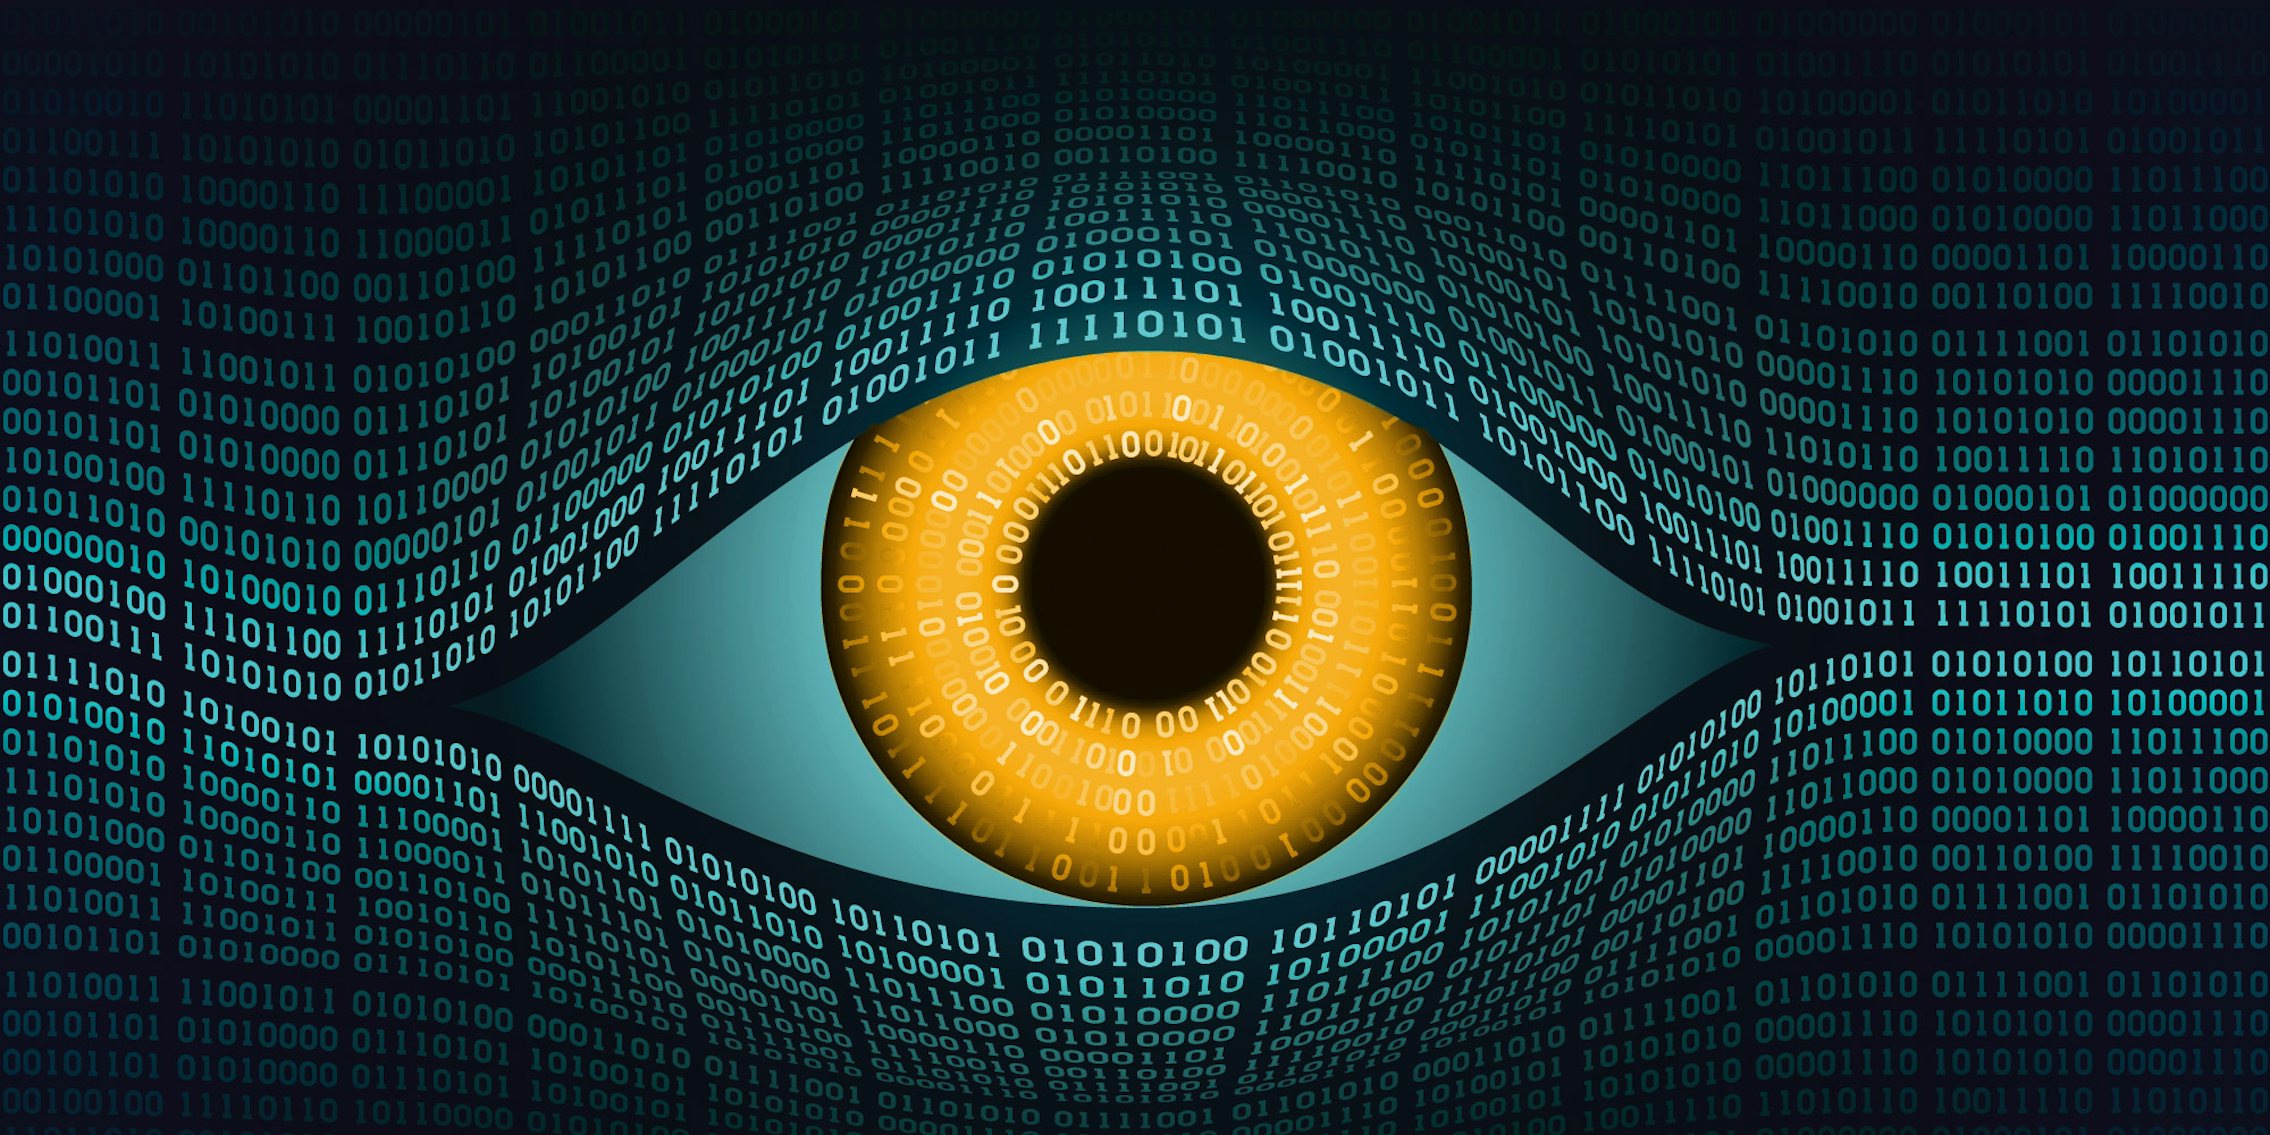 'Big Brother eye' concept with orange colored iris